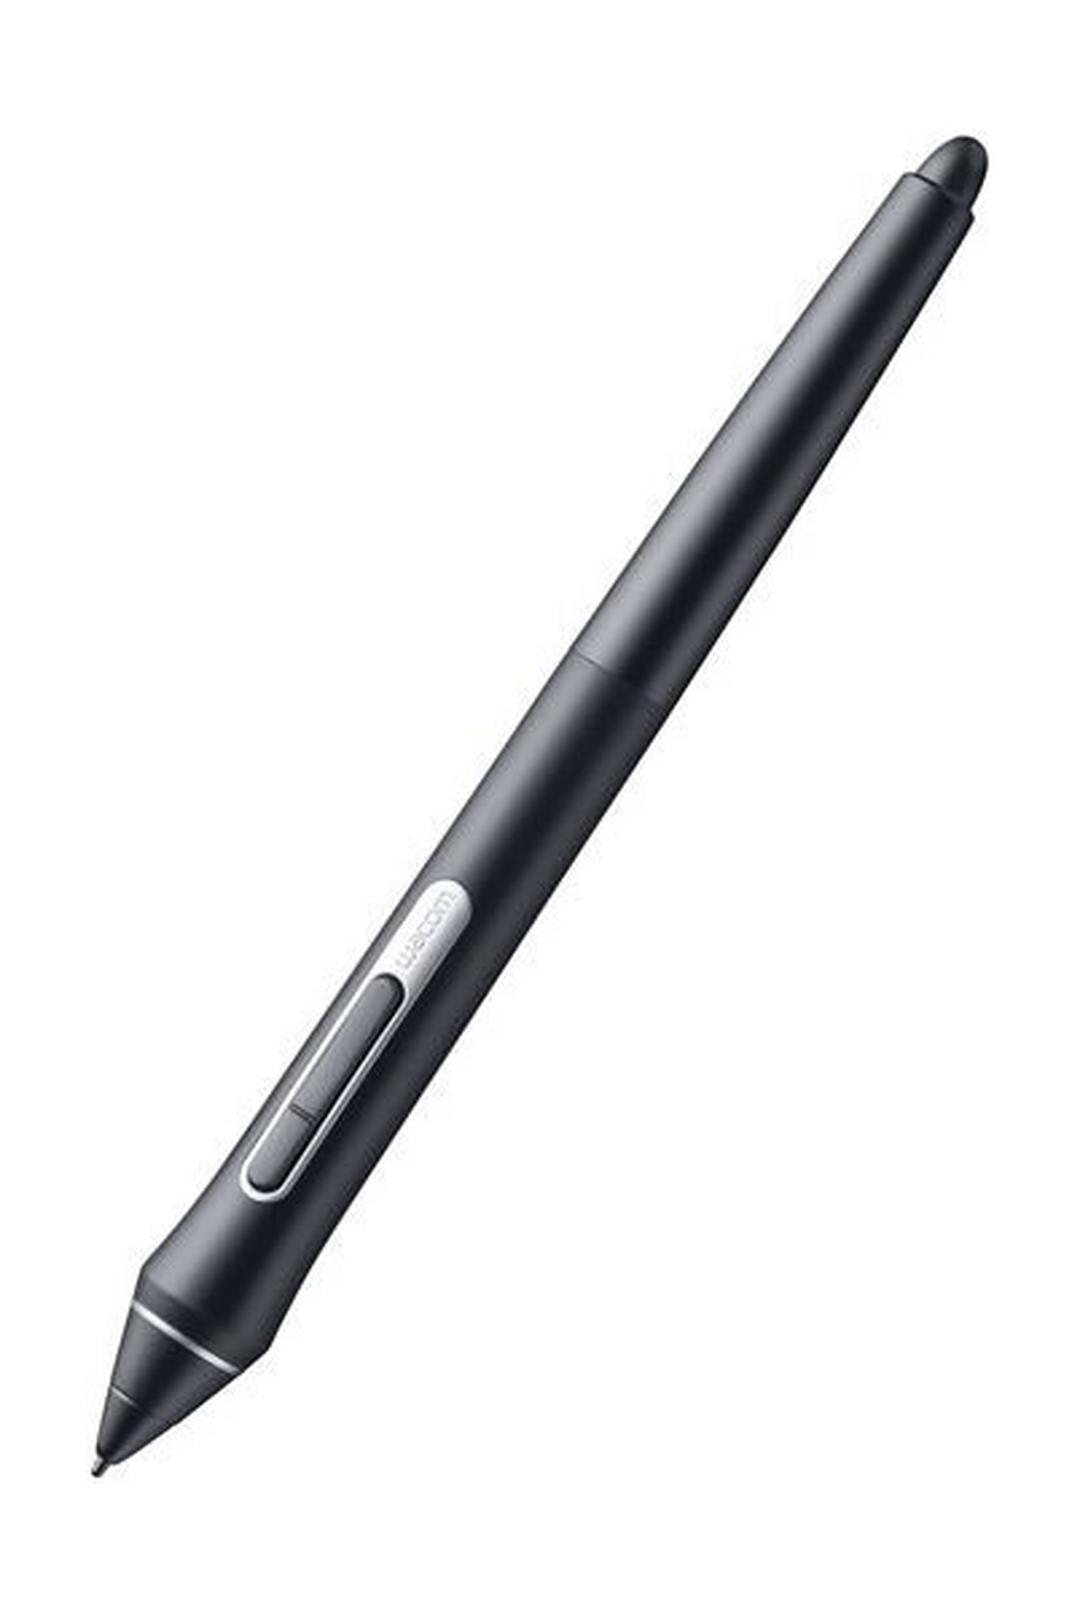 Wacom Intuos Pro Large PTH-860 Pen Tablet (INTUOS PRO-L-ENES) - Black